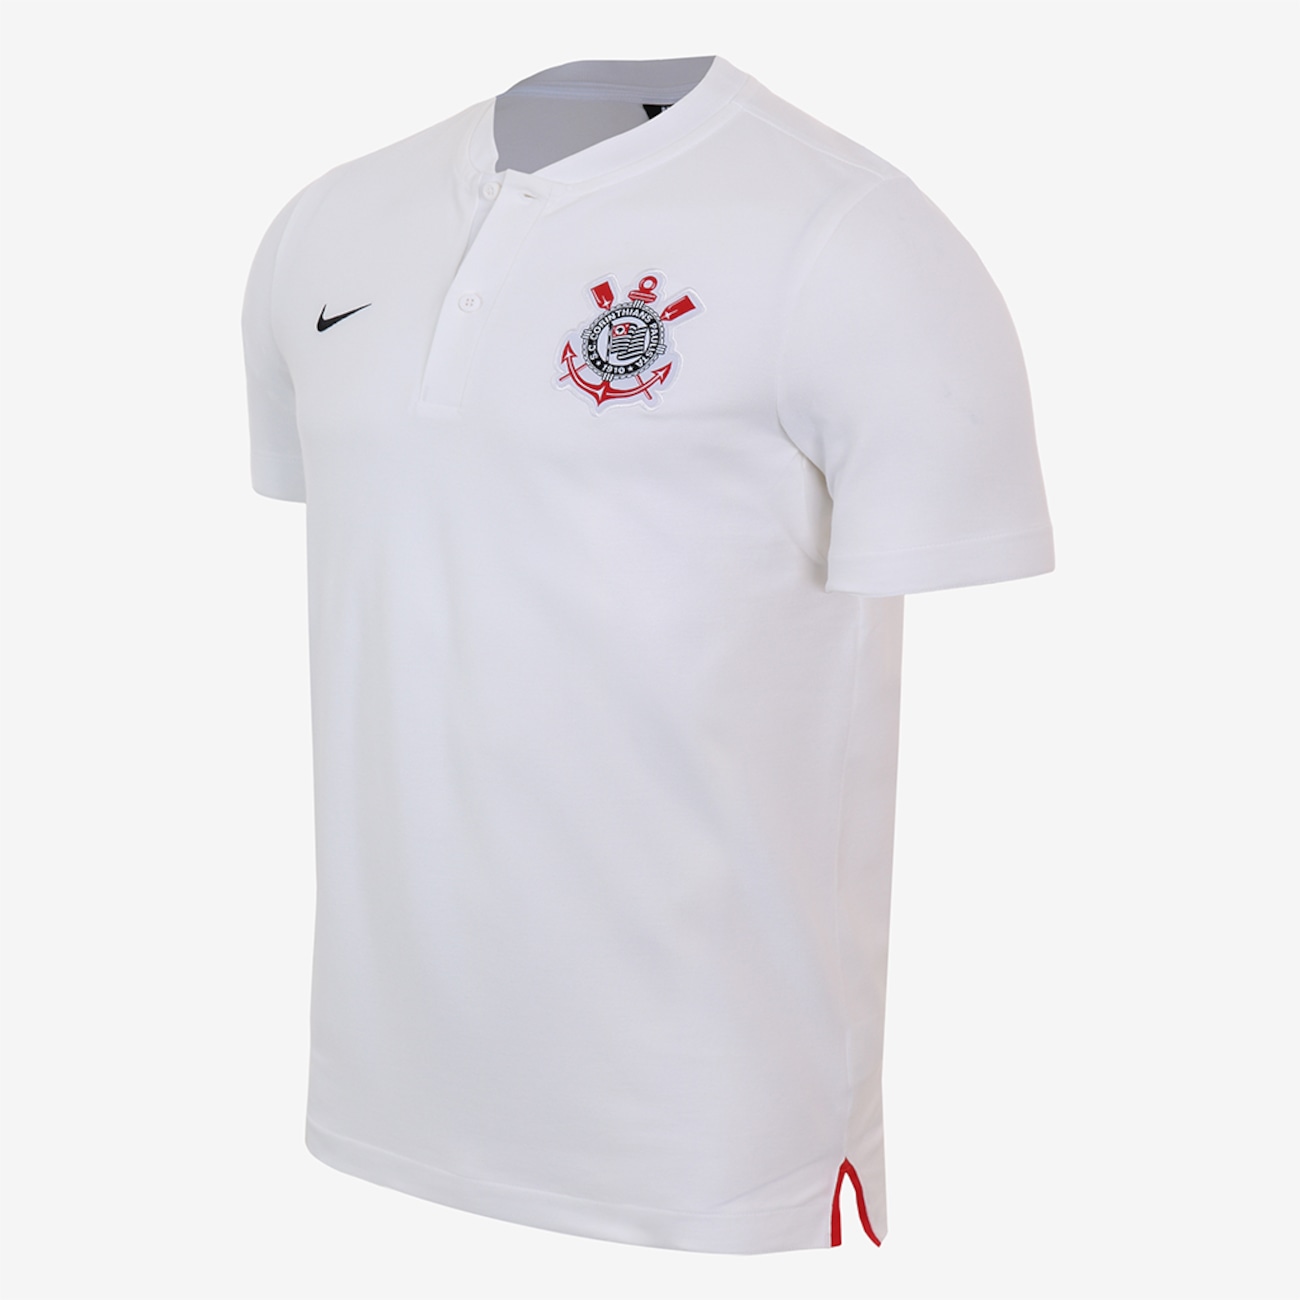 Camisa Polo Nike Sportswear Corinthians Masculina - Foto 1